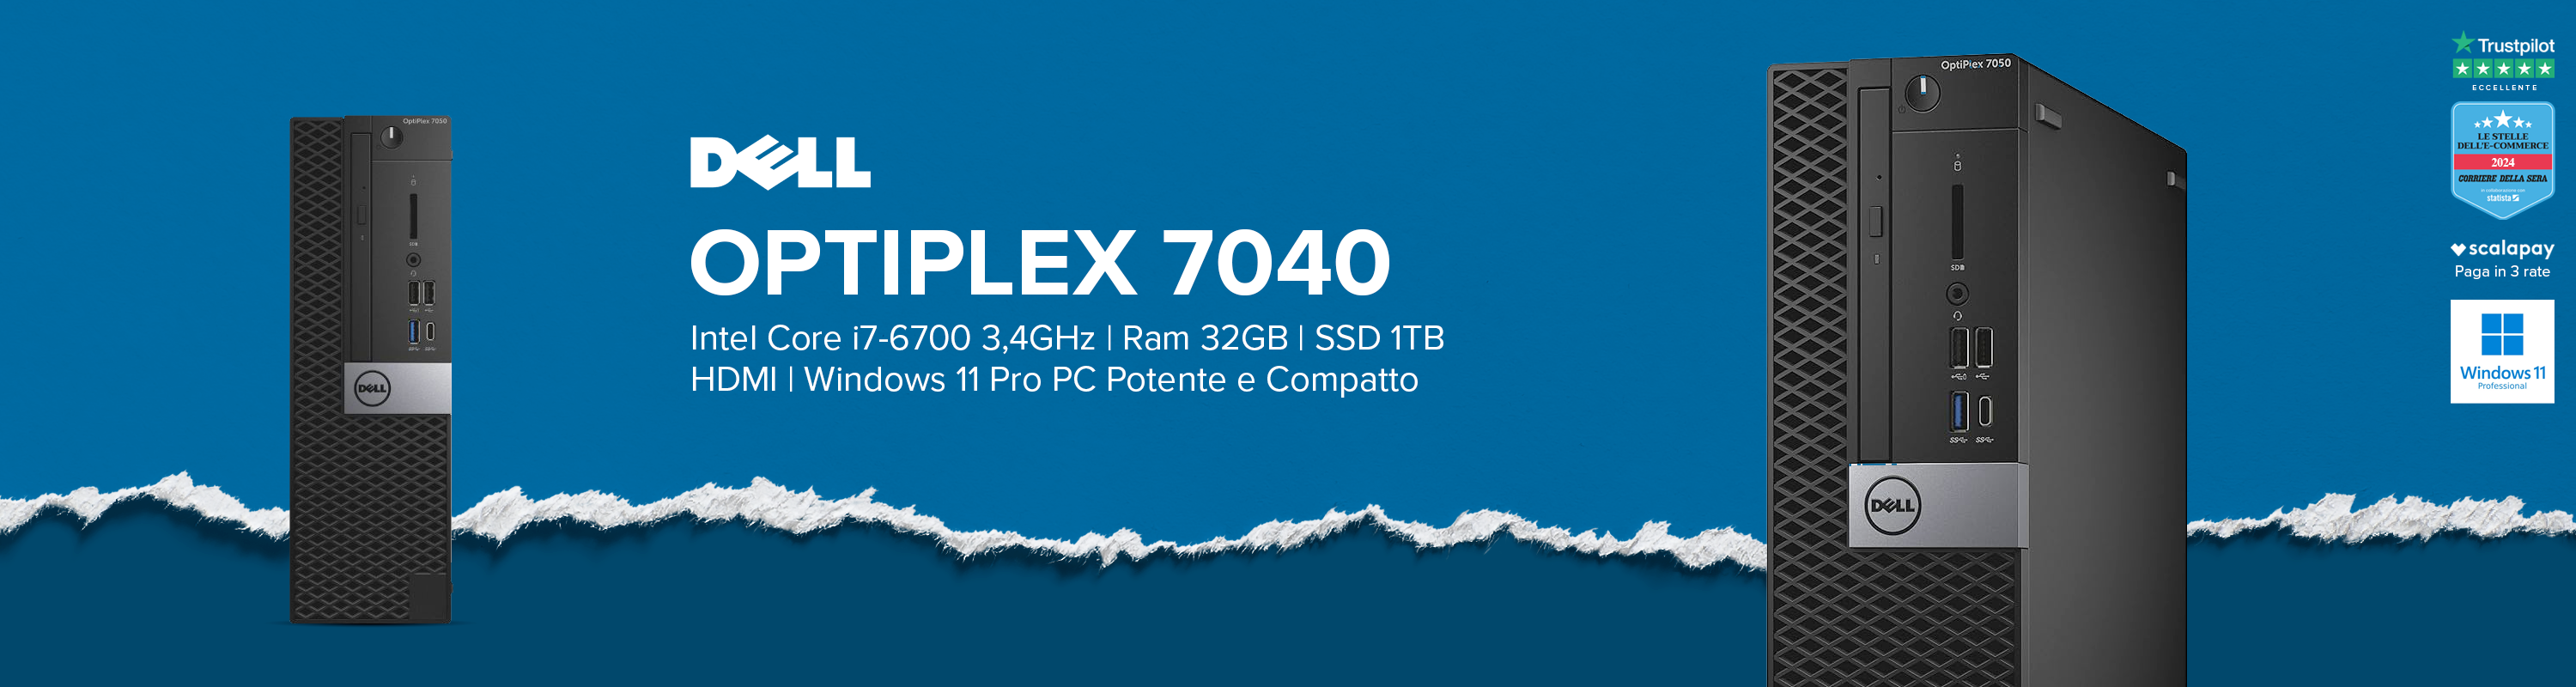 Dell Optiplex 7040